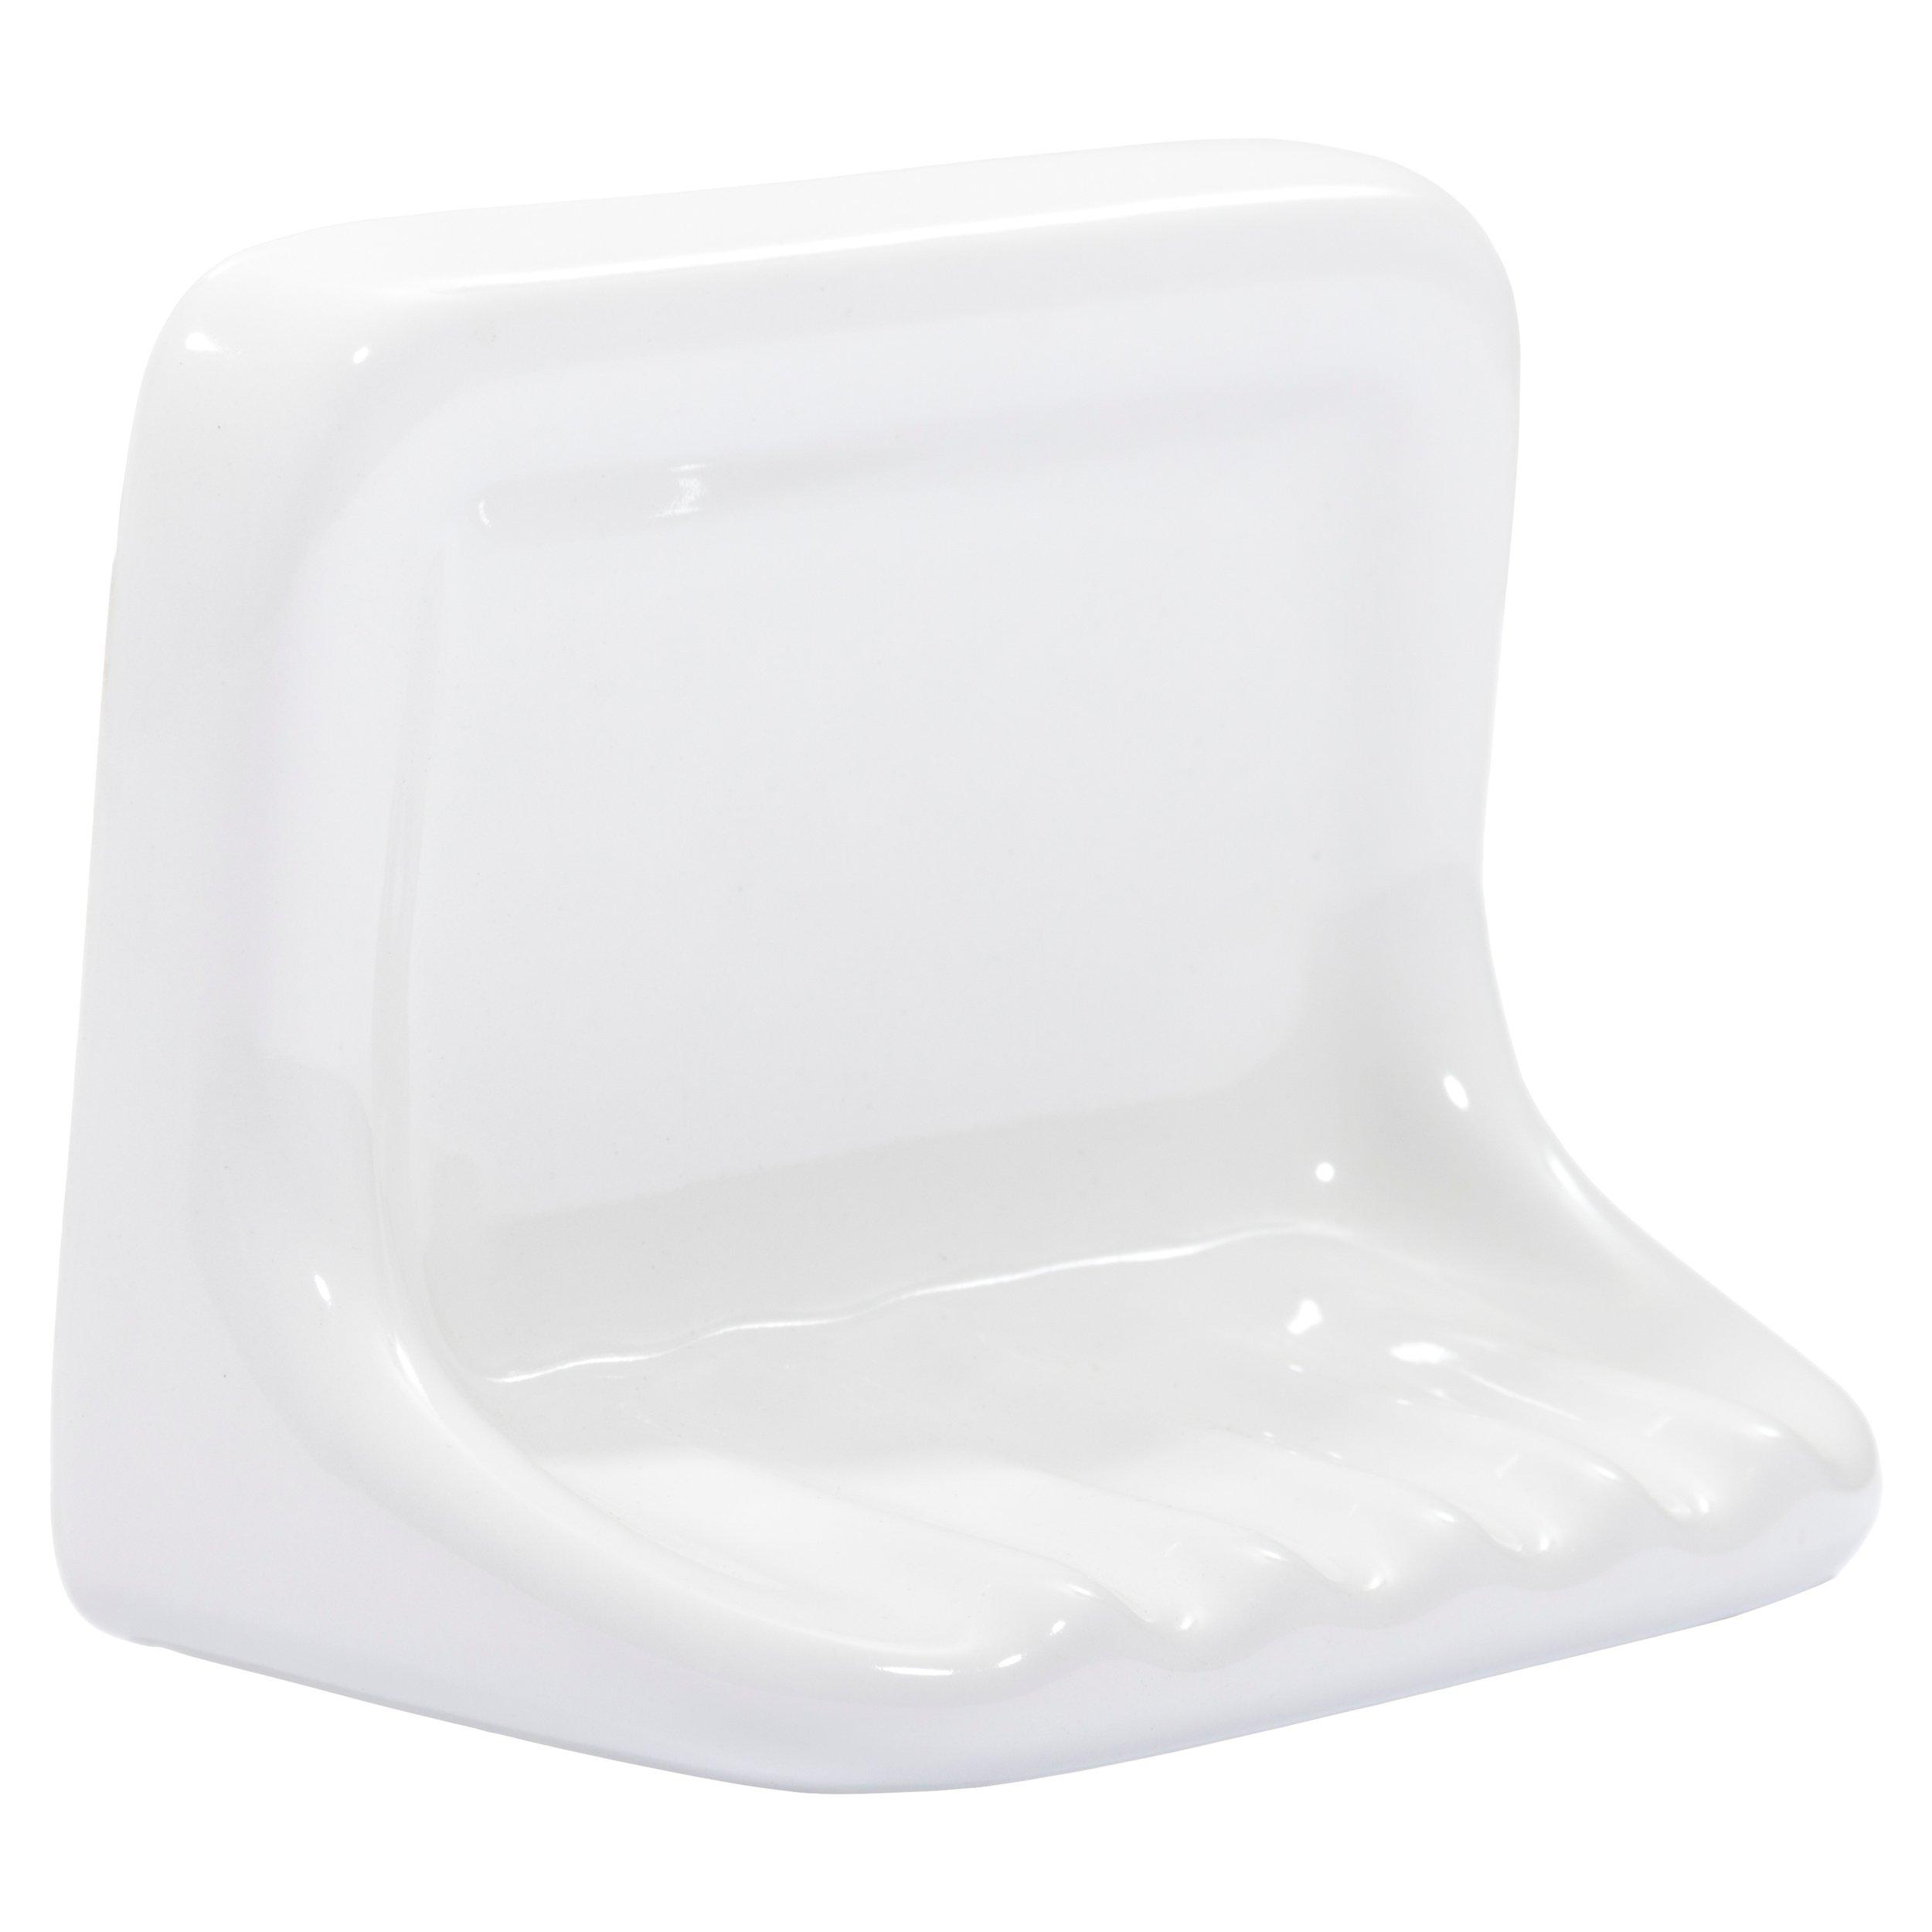 Clear Plastic Wall Mount Shower / Bath Soap Bar Holder Dish wth